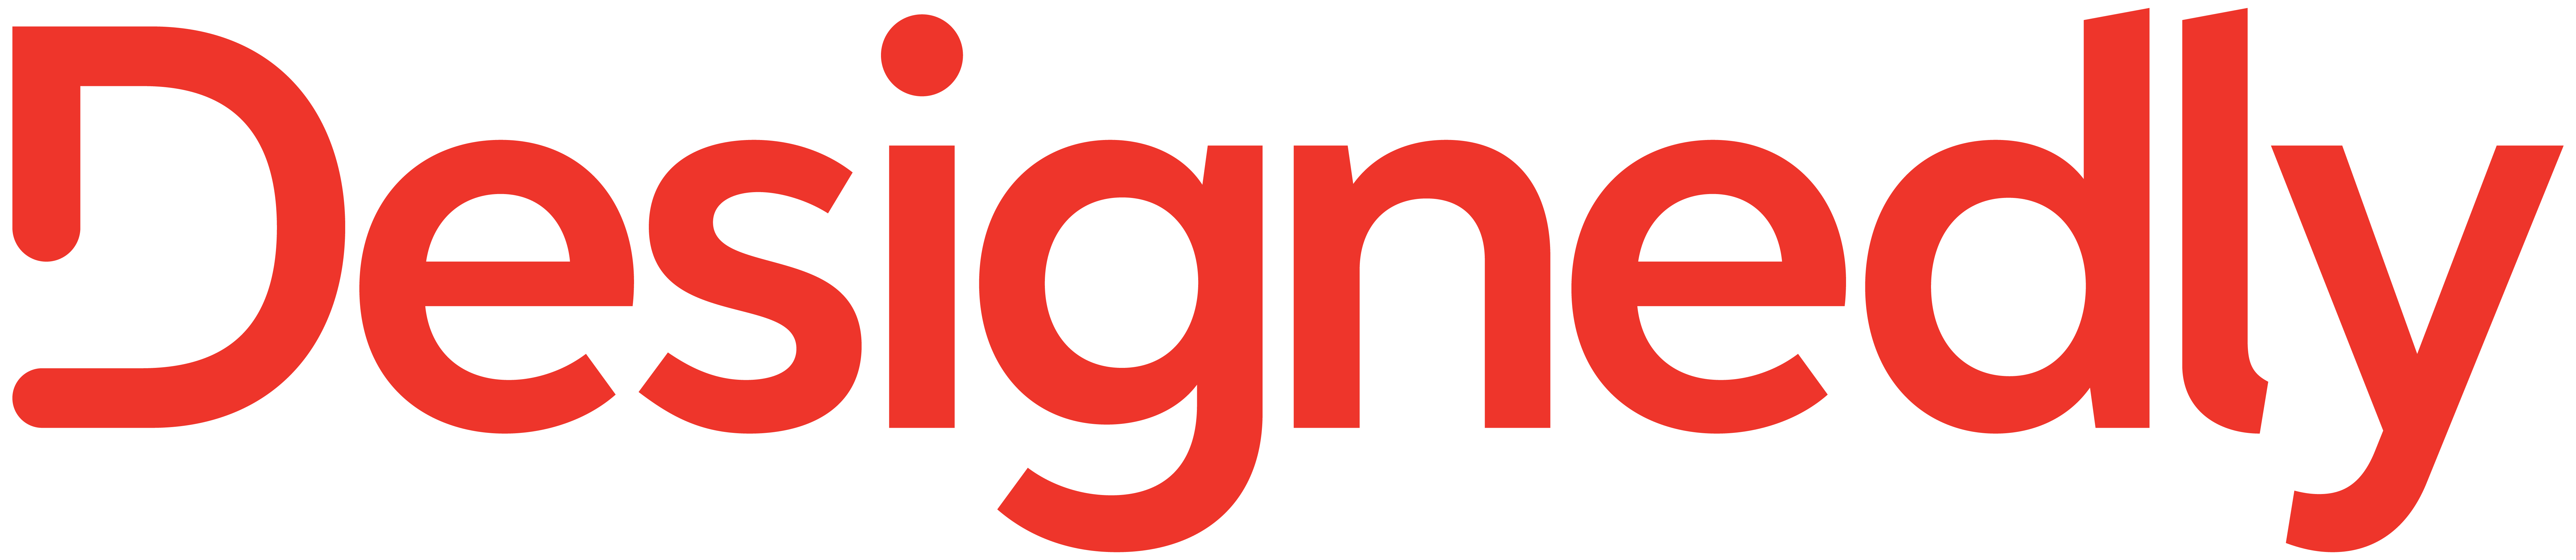 Designedly Red Logo RGB